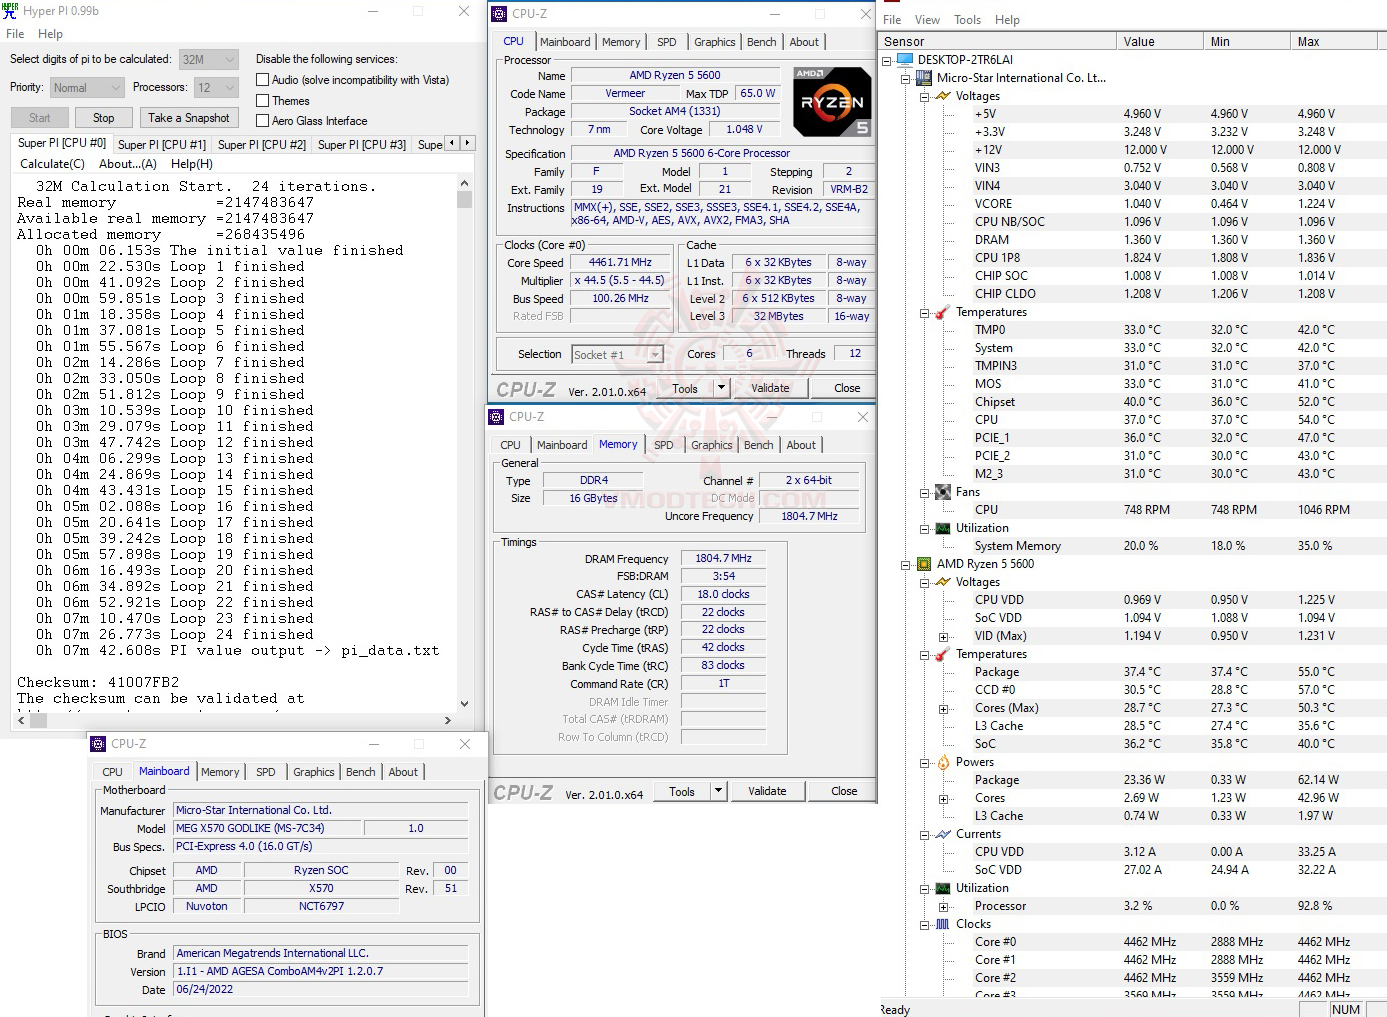 h32 AMD RYZEN 5 5600 PROCESSOR REVIEW